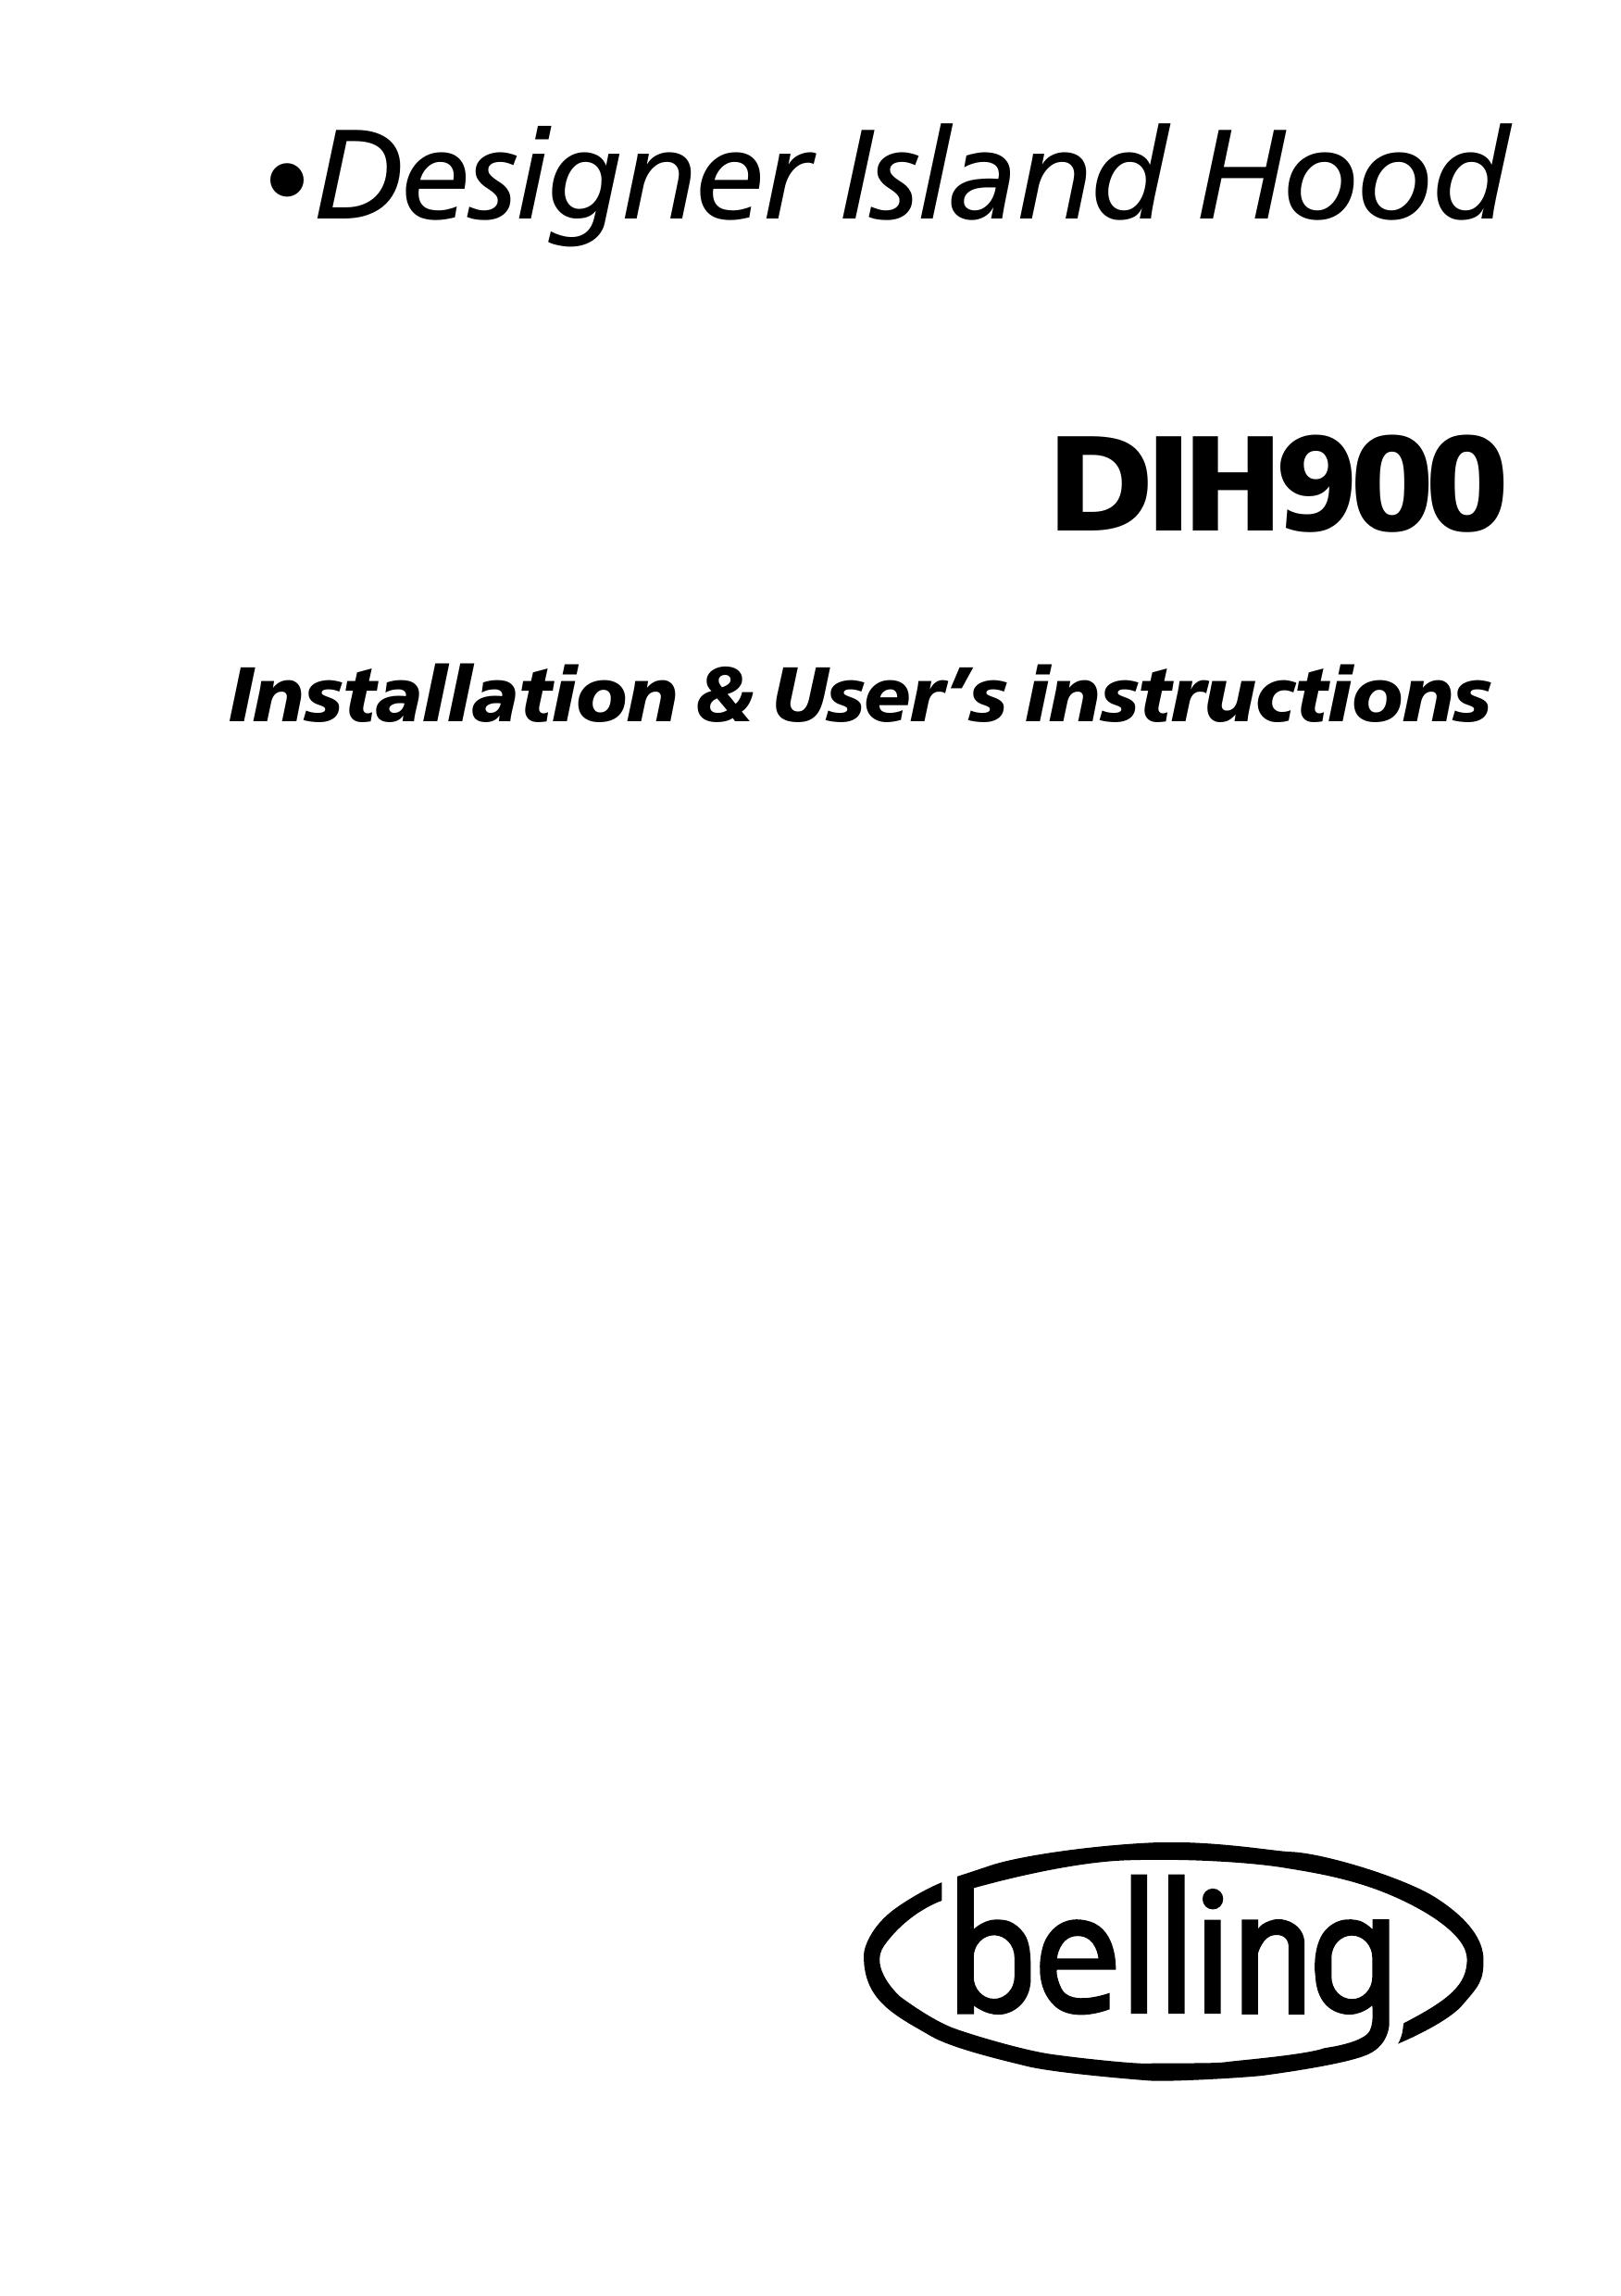 Glen Dimplex Home Appliances Ltd DIH900 Ventilation Hood User Manual